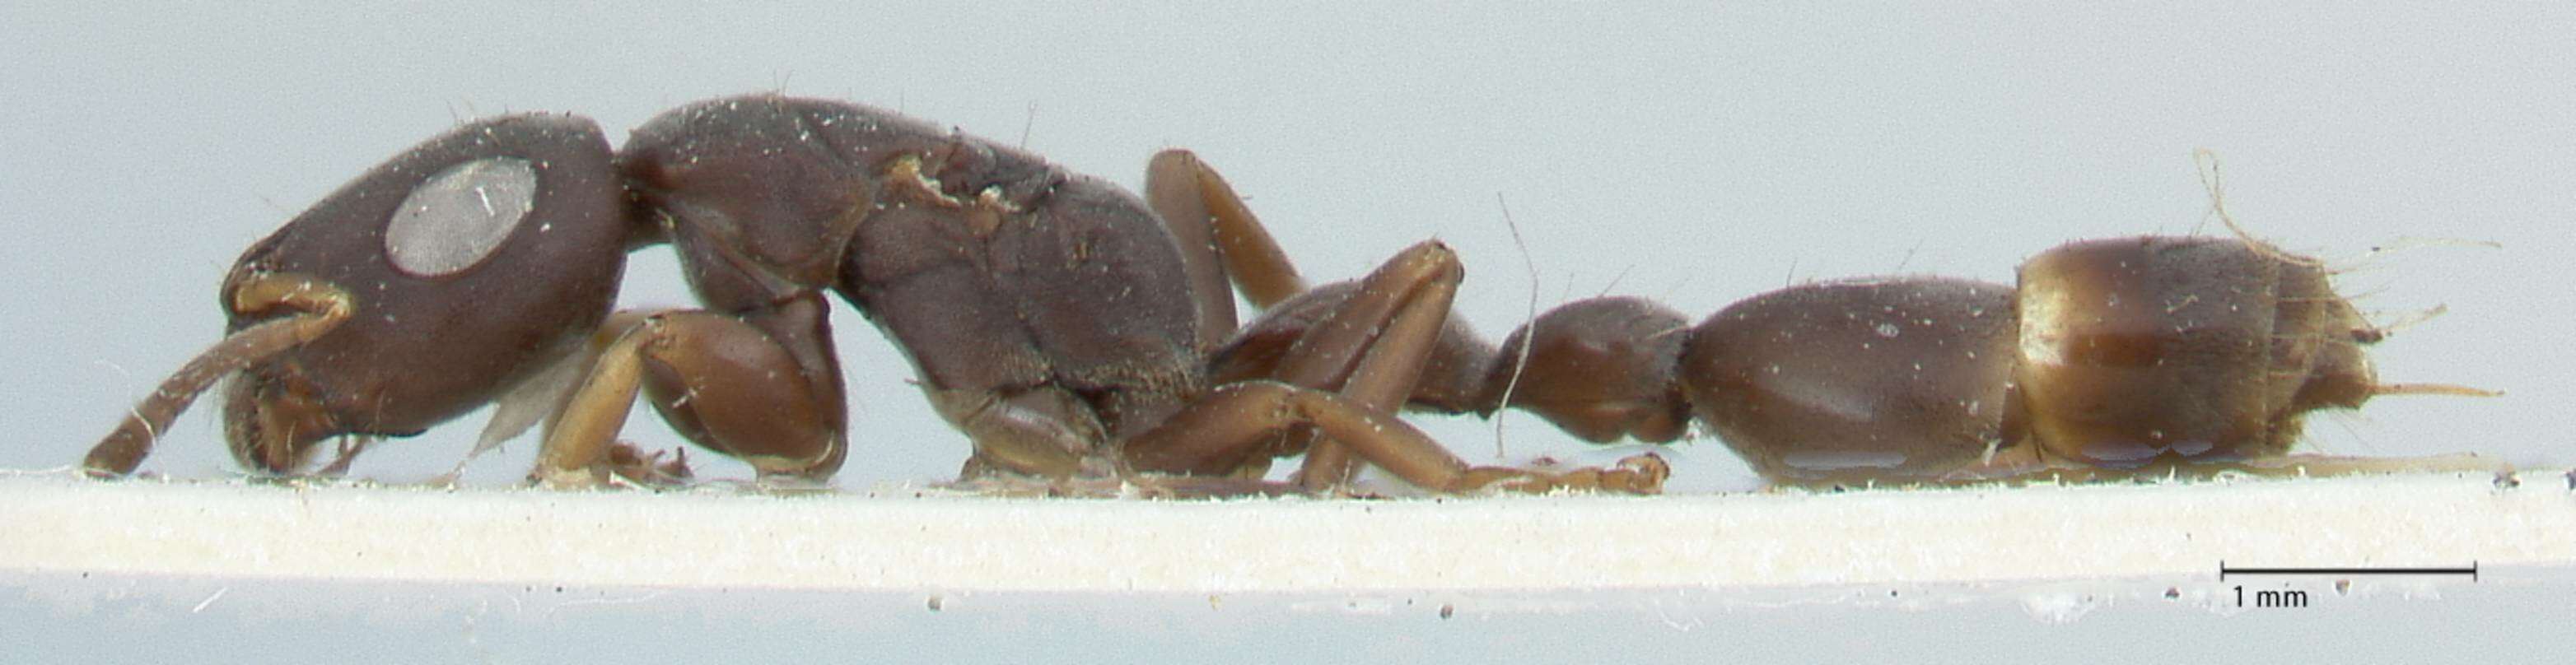 Image of Tetraponera pilosa (Smith 1858)